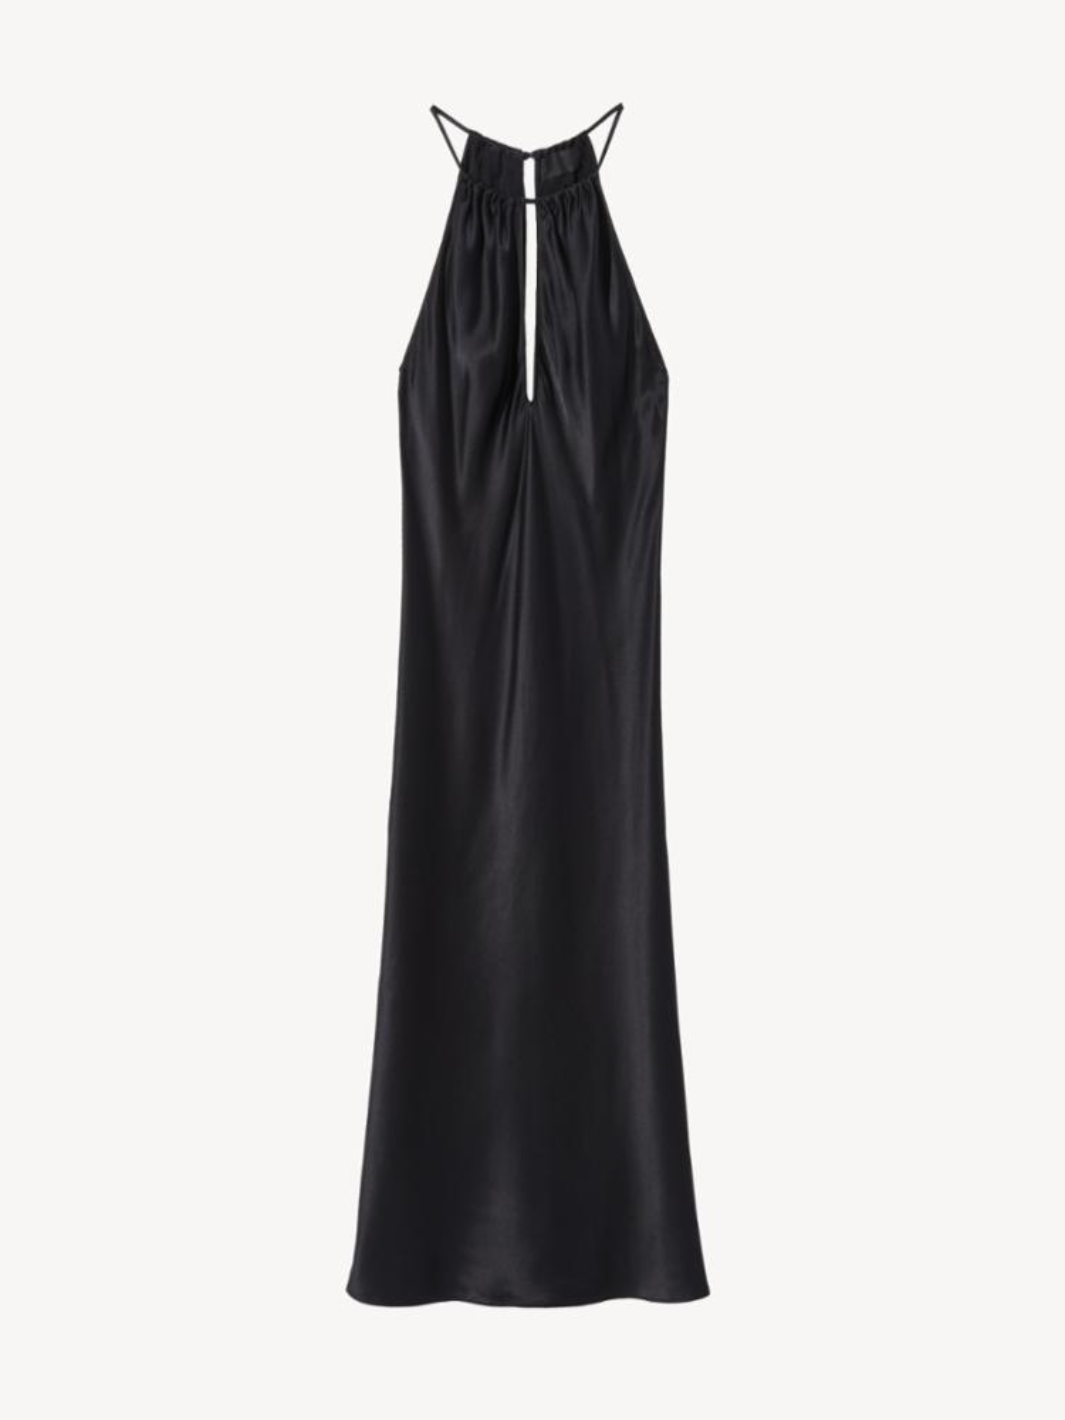 EGLANTINE HALTERNECK DRESS IN BLACK - Romi Boutique